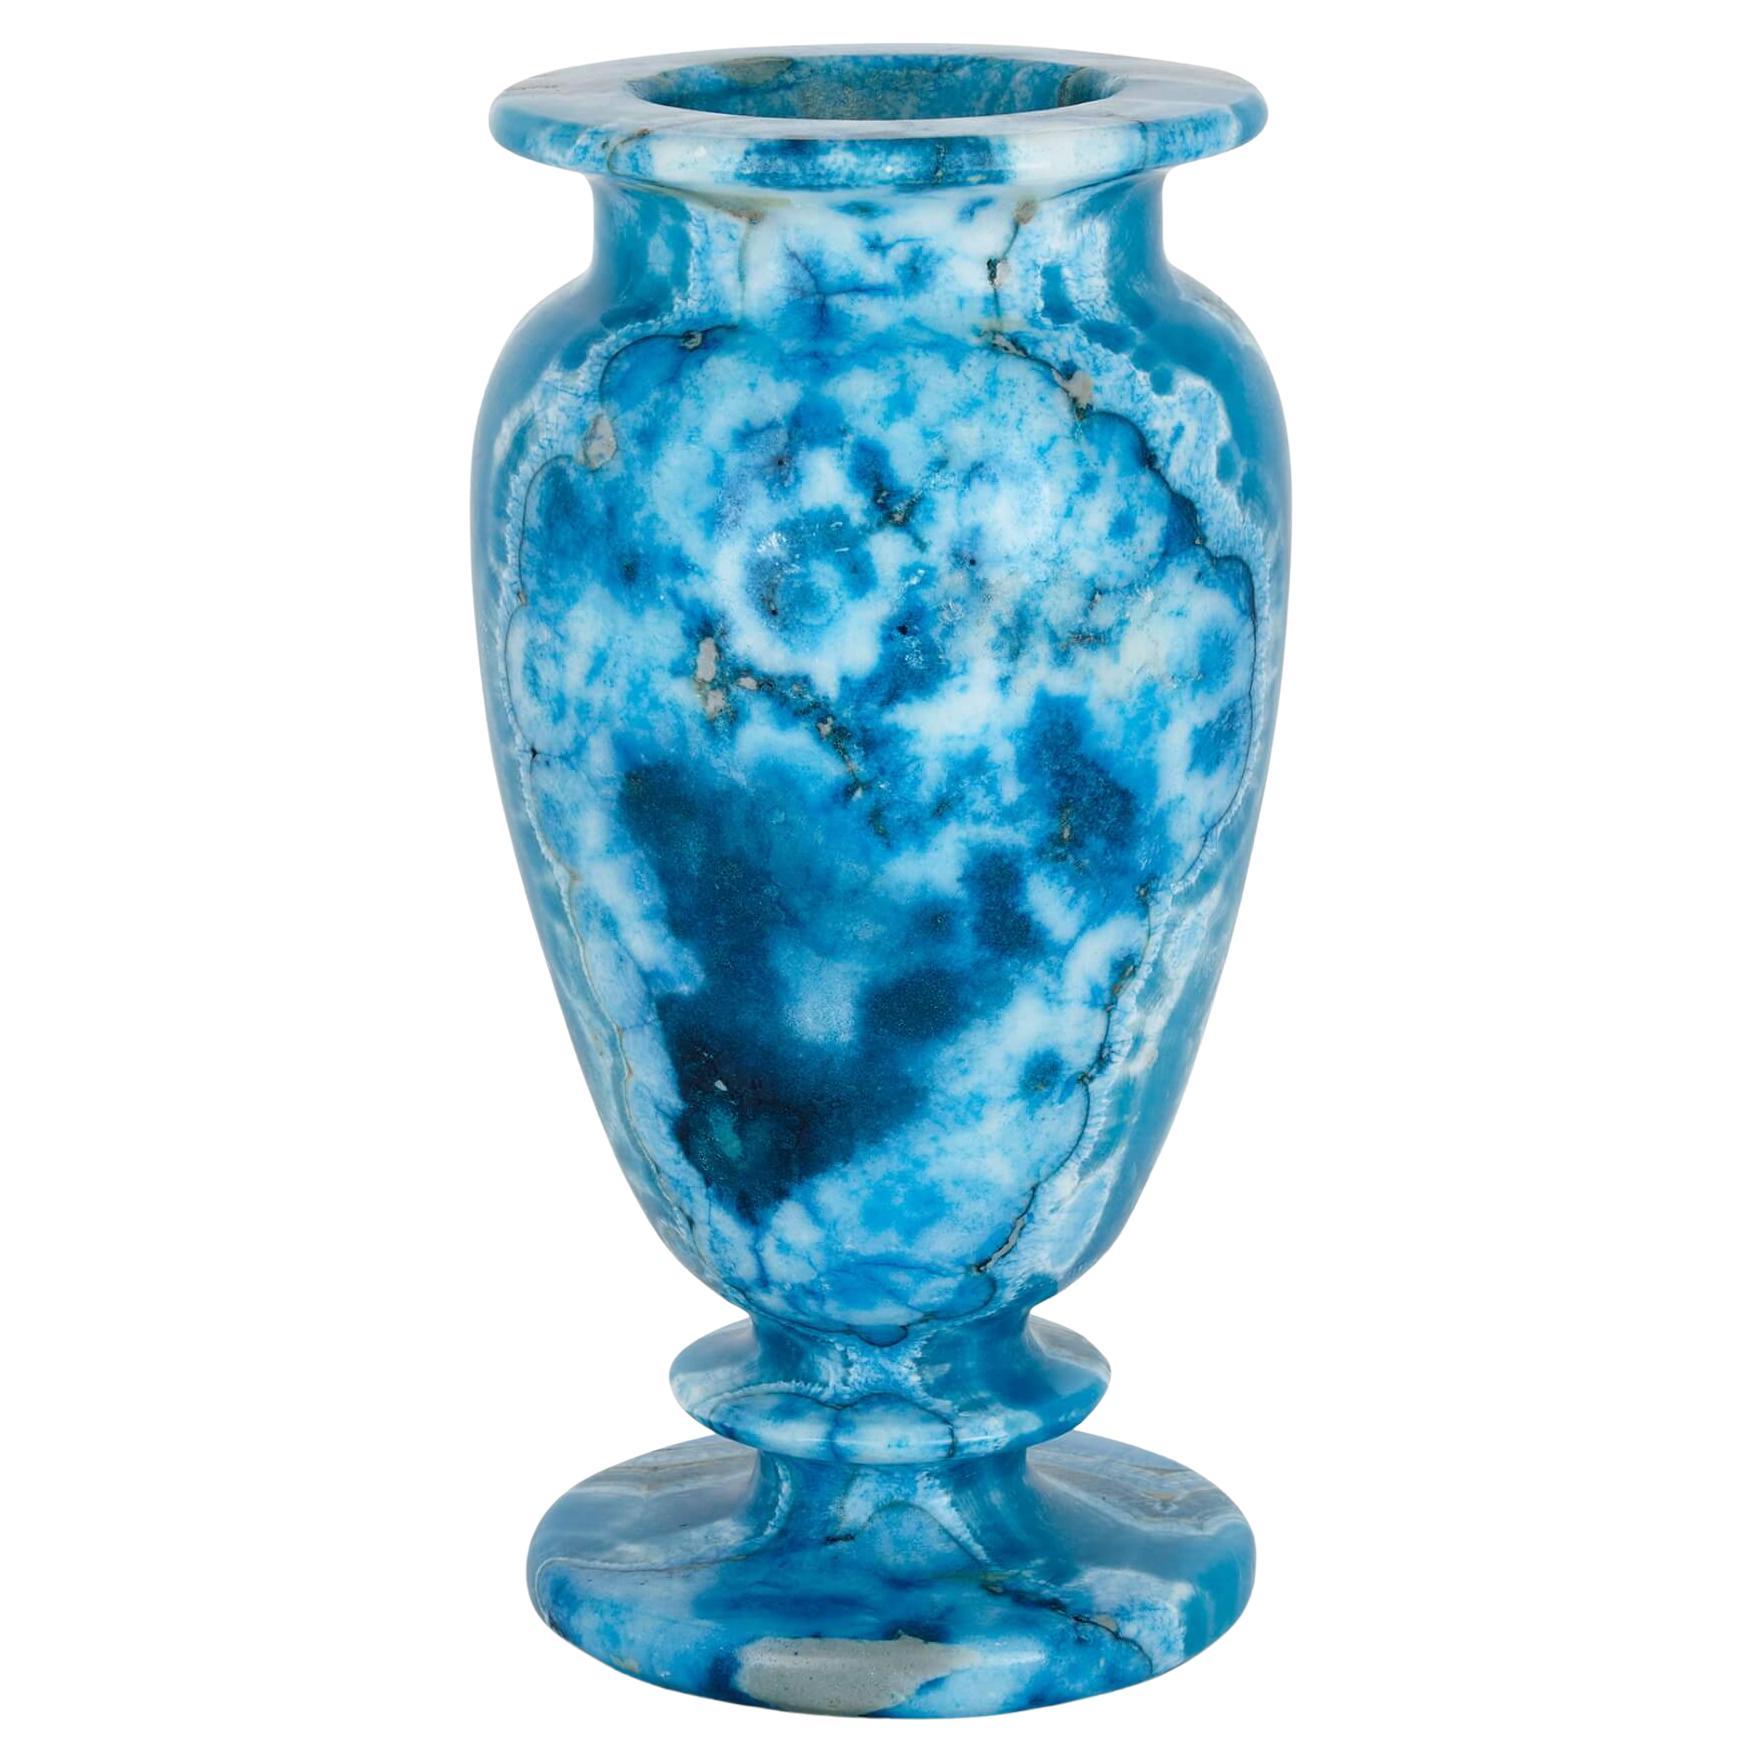 Blue-Dyed Calcite Urn-Shaped Mineral Vase For Sale